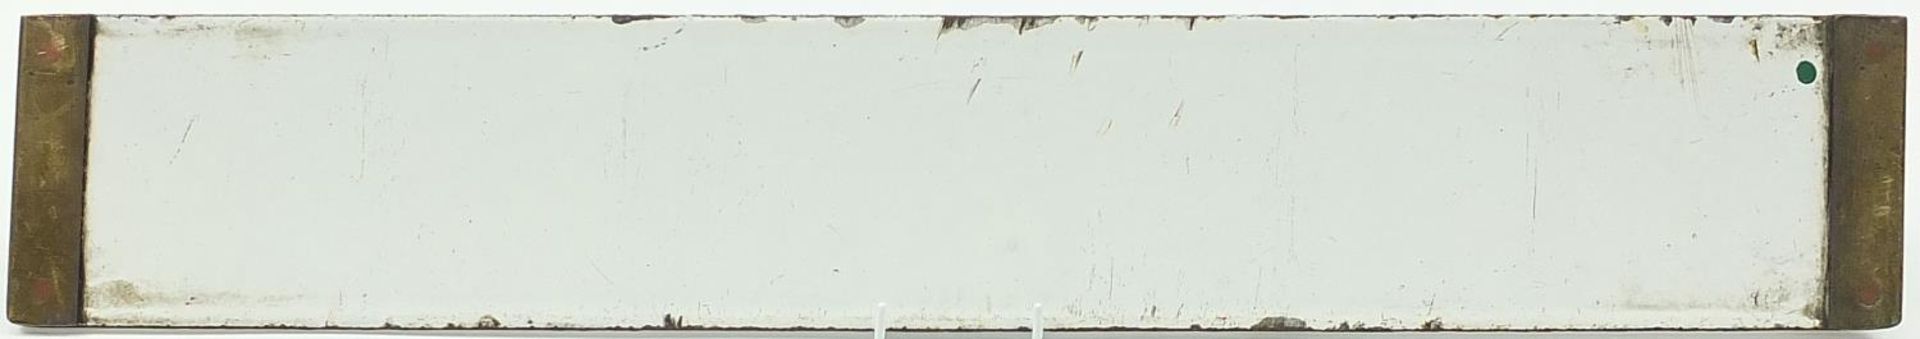 Railway interest Northern Line enamel sign, 62cm x 10cm - Image 2 of 2